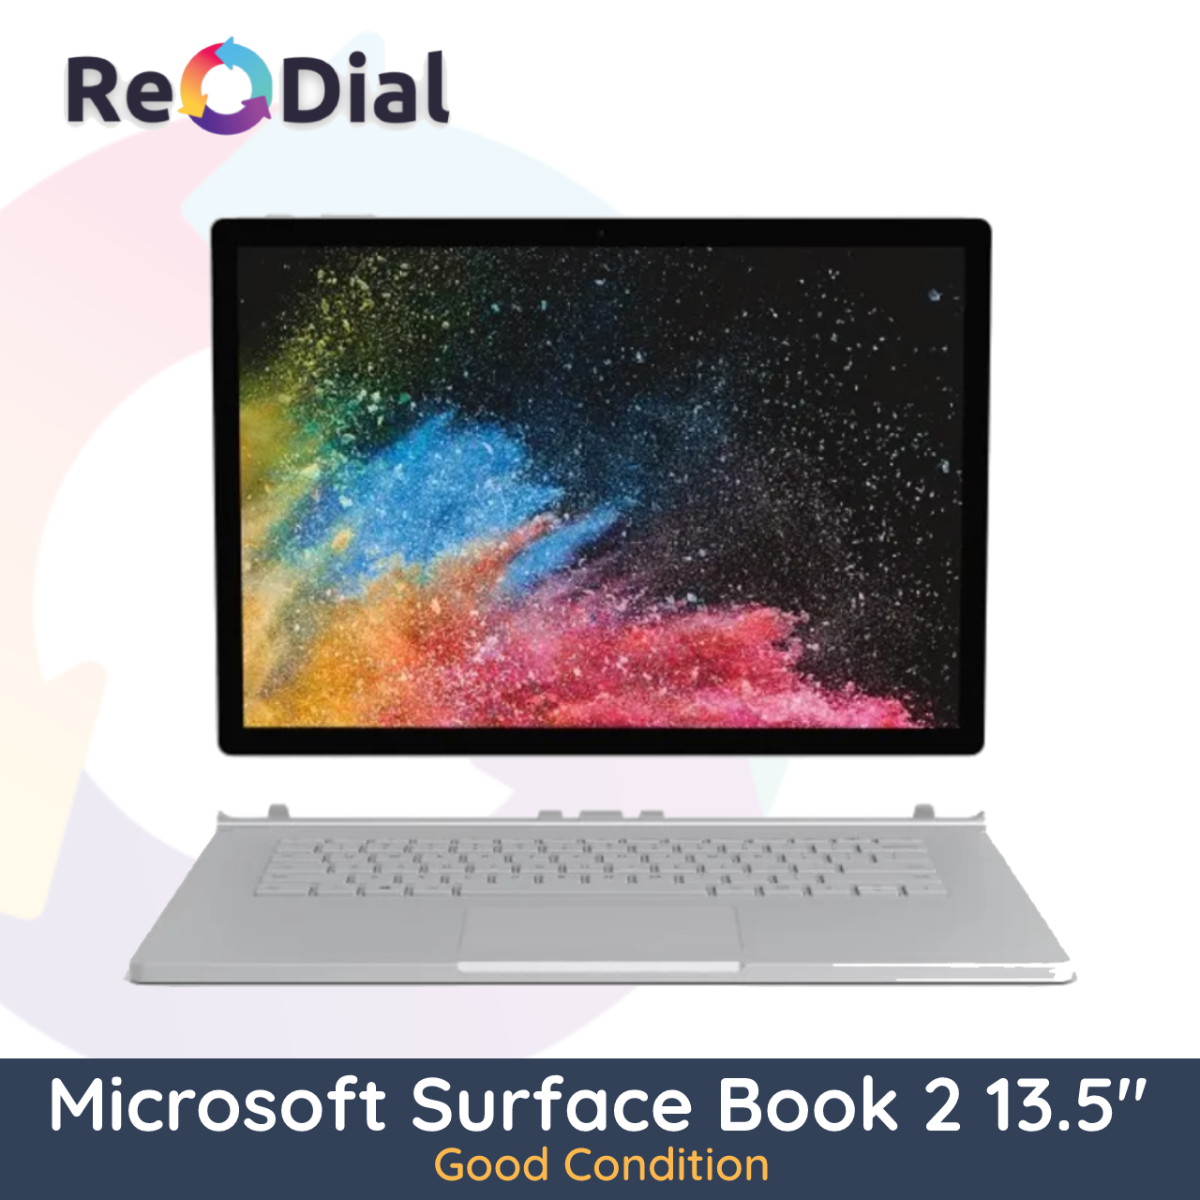 Microsoft Surface Book 2 13.5" Laptop Intel Core i5 256GB 8GB RAM - Good Condition